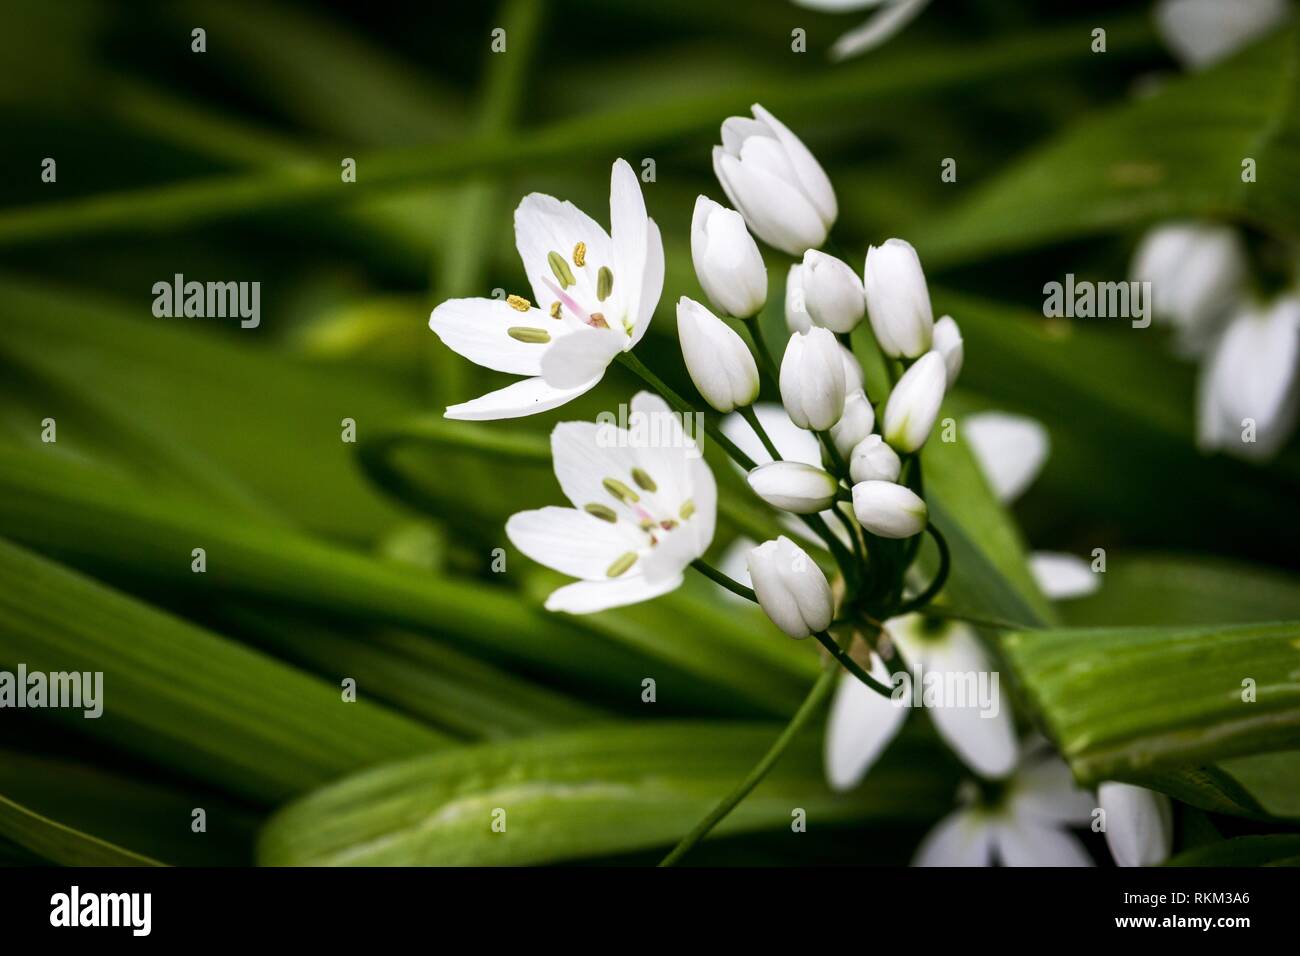 Small white delicate Allium flowers. Stock Photo